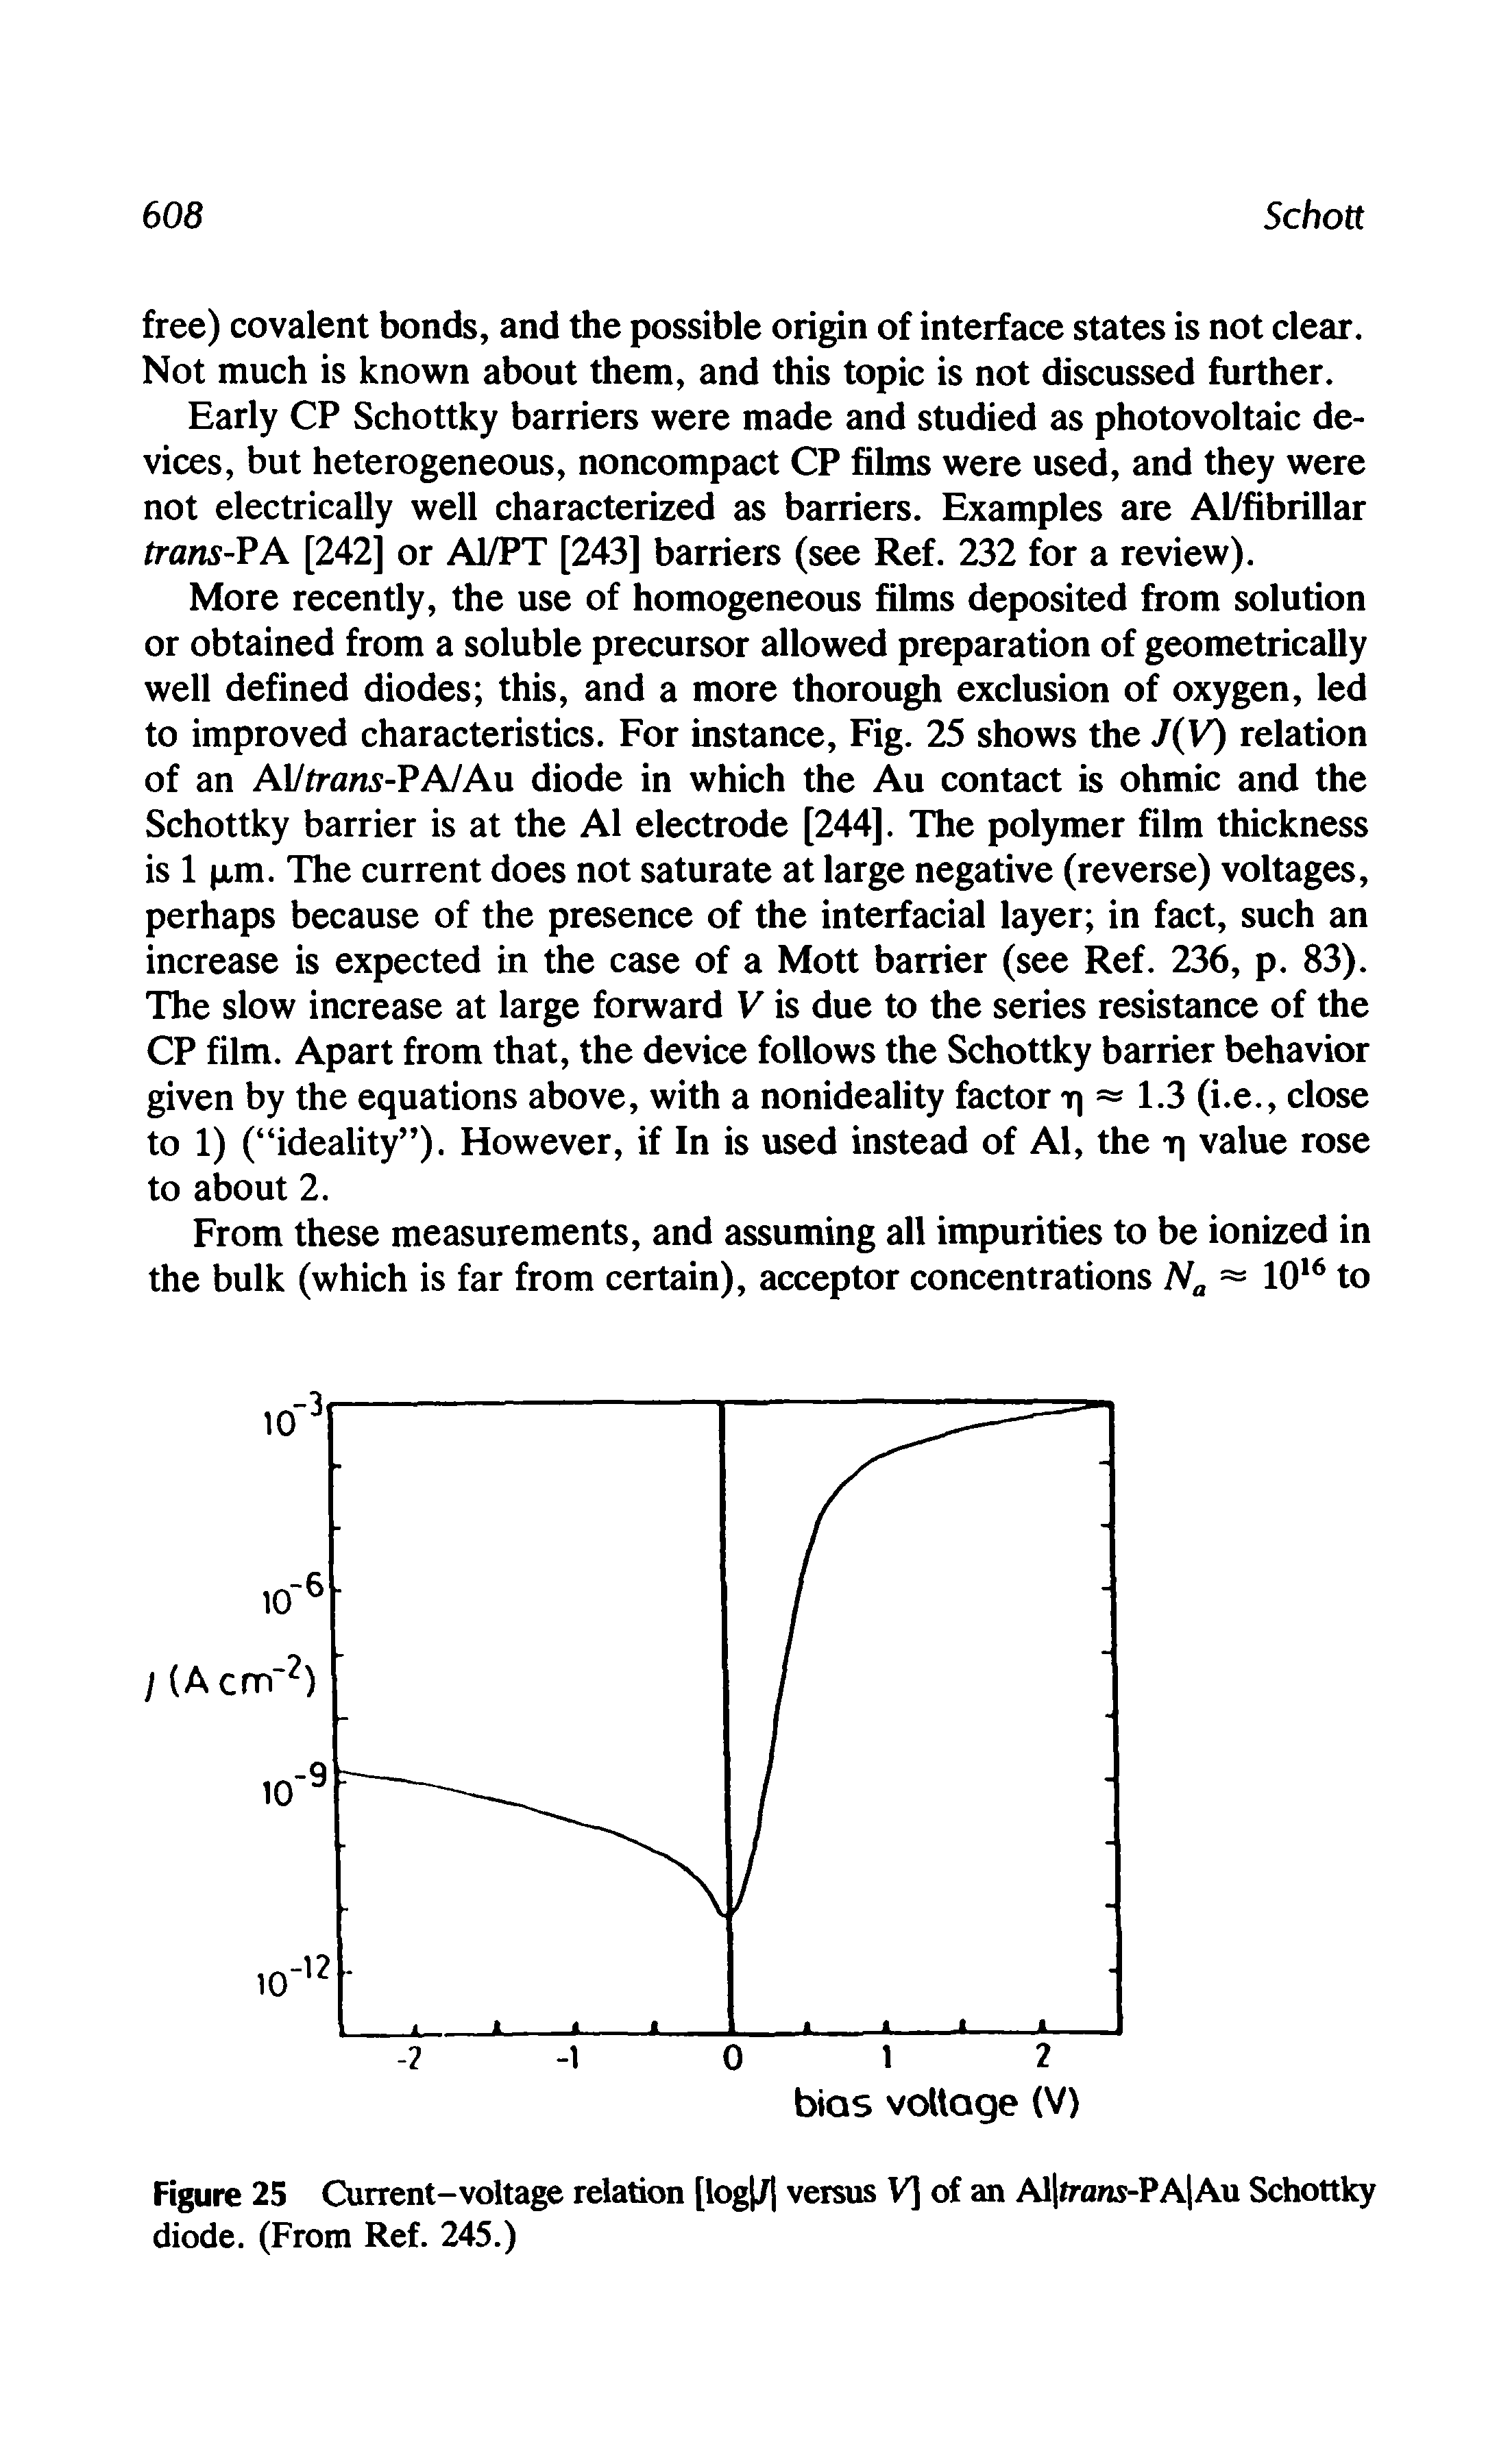 Figure 25 Current-voltage relation [log /j versus V] of an Al ftww-PA Au Schottky diode. (From Ref. 245.)...